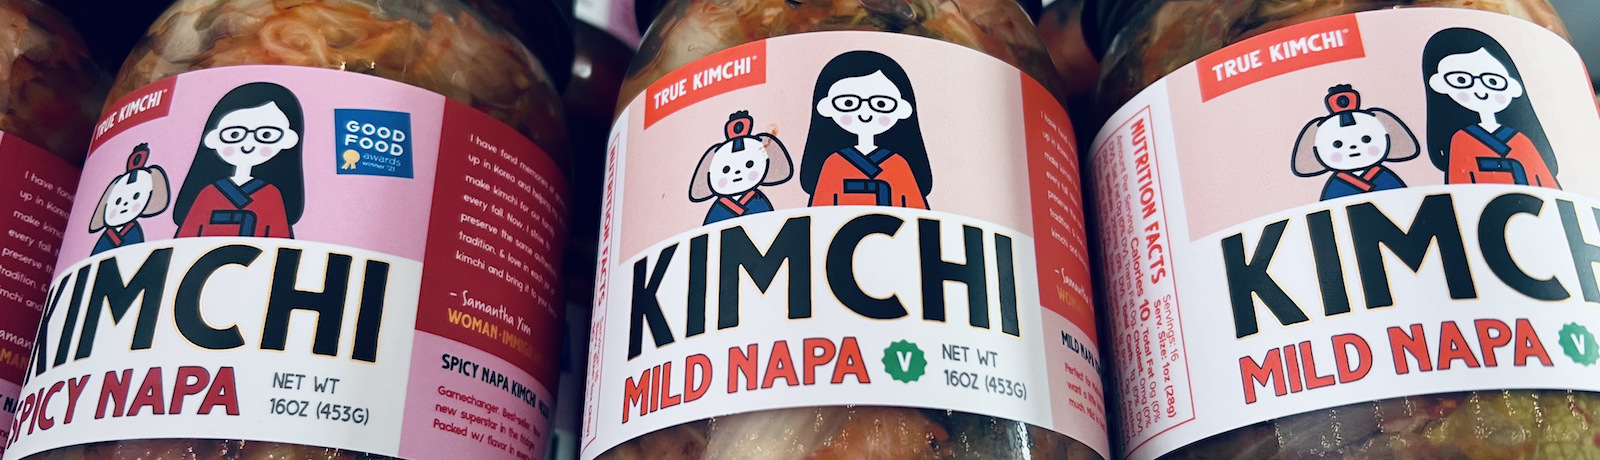 Take a sneak peek inside True Kimchi's new storefront cafe and Korean market at 2805 E. State Blvd.